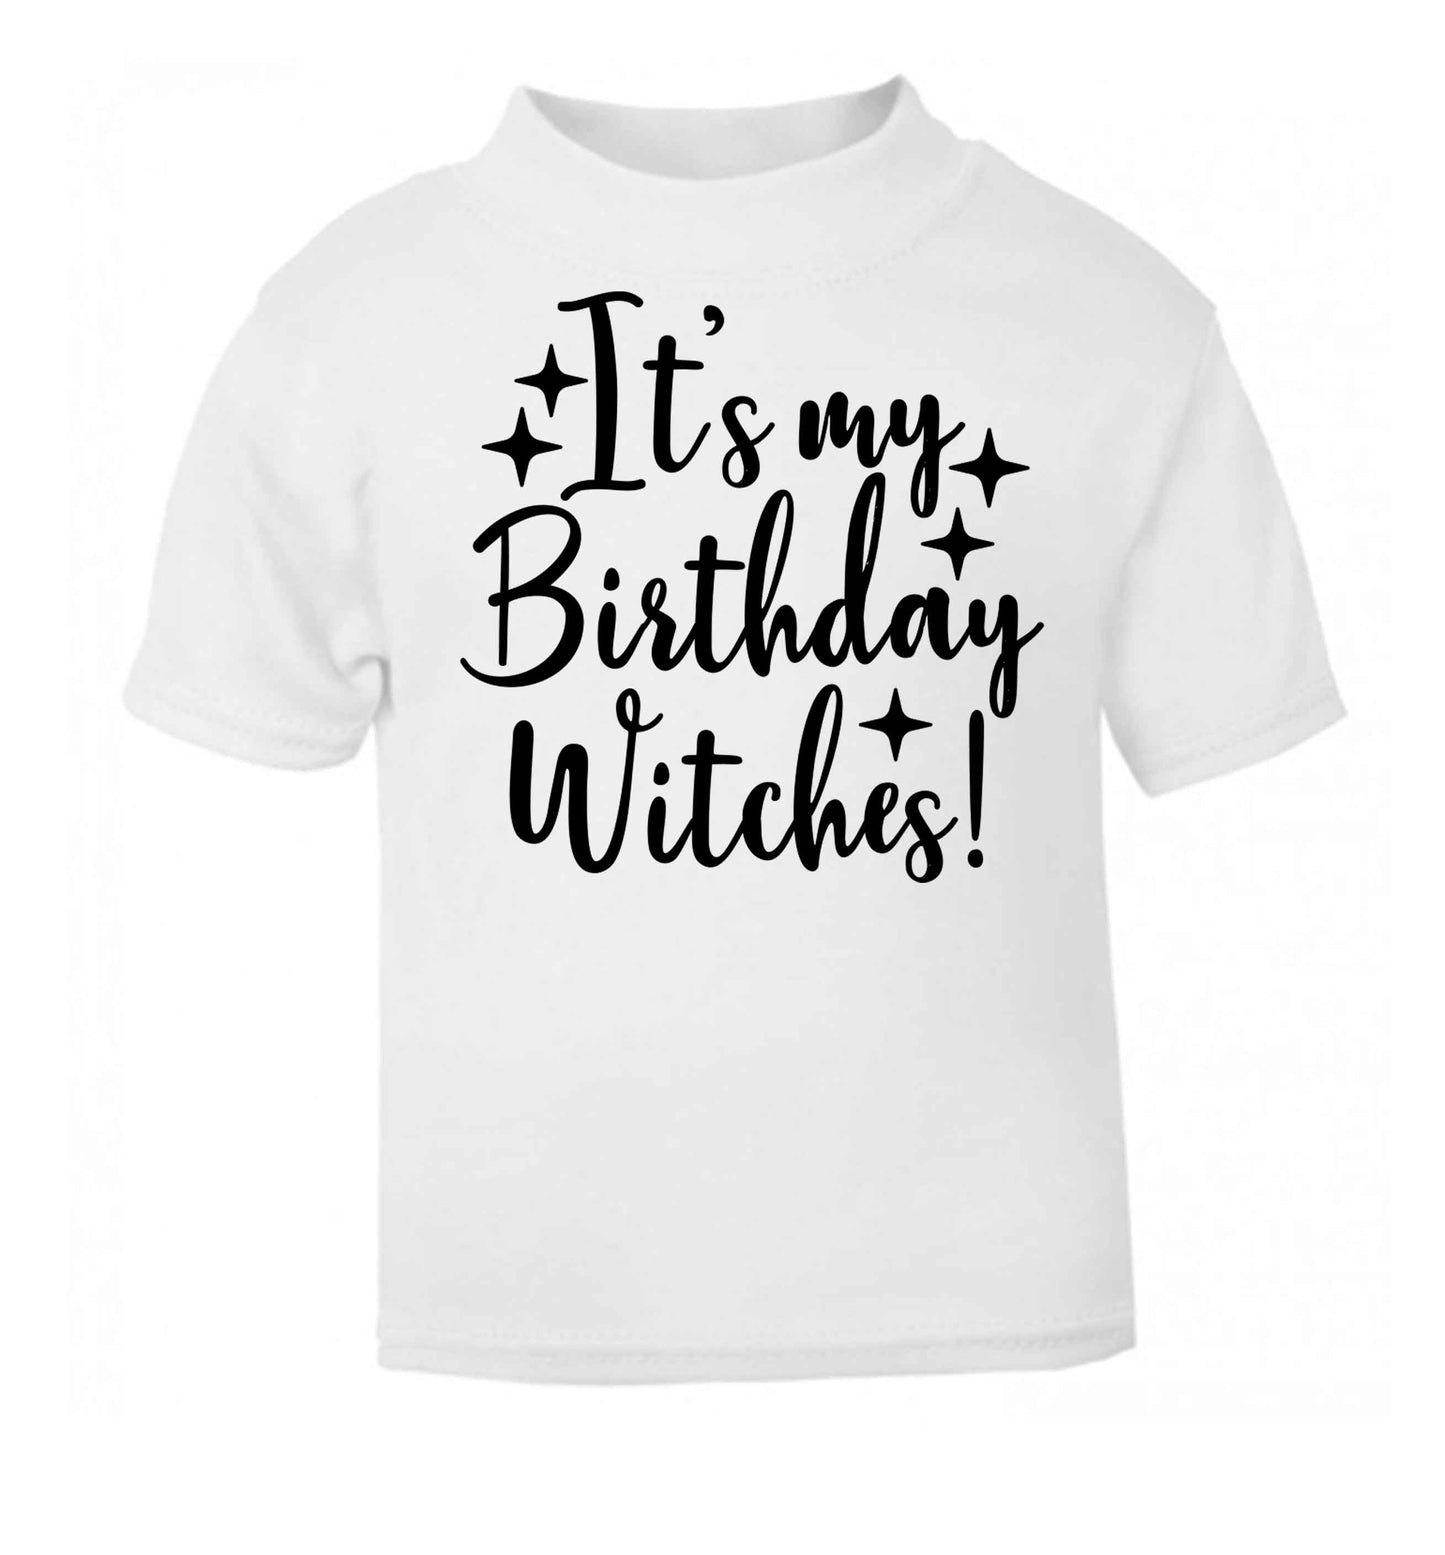 It's my birthday witches!white baby toddler Tshirt 2 Years